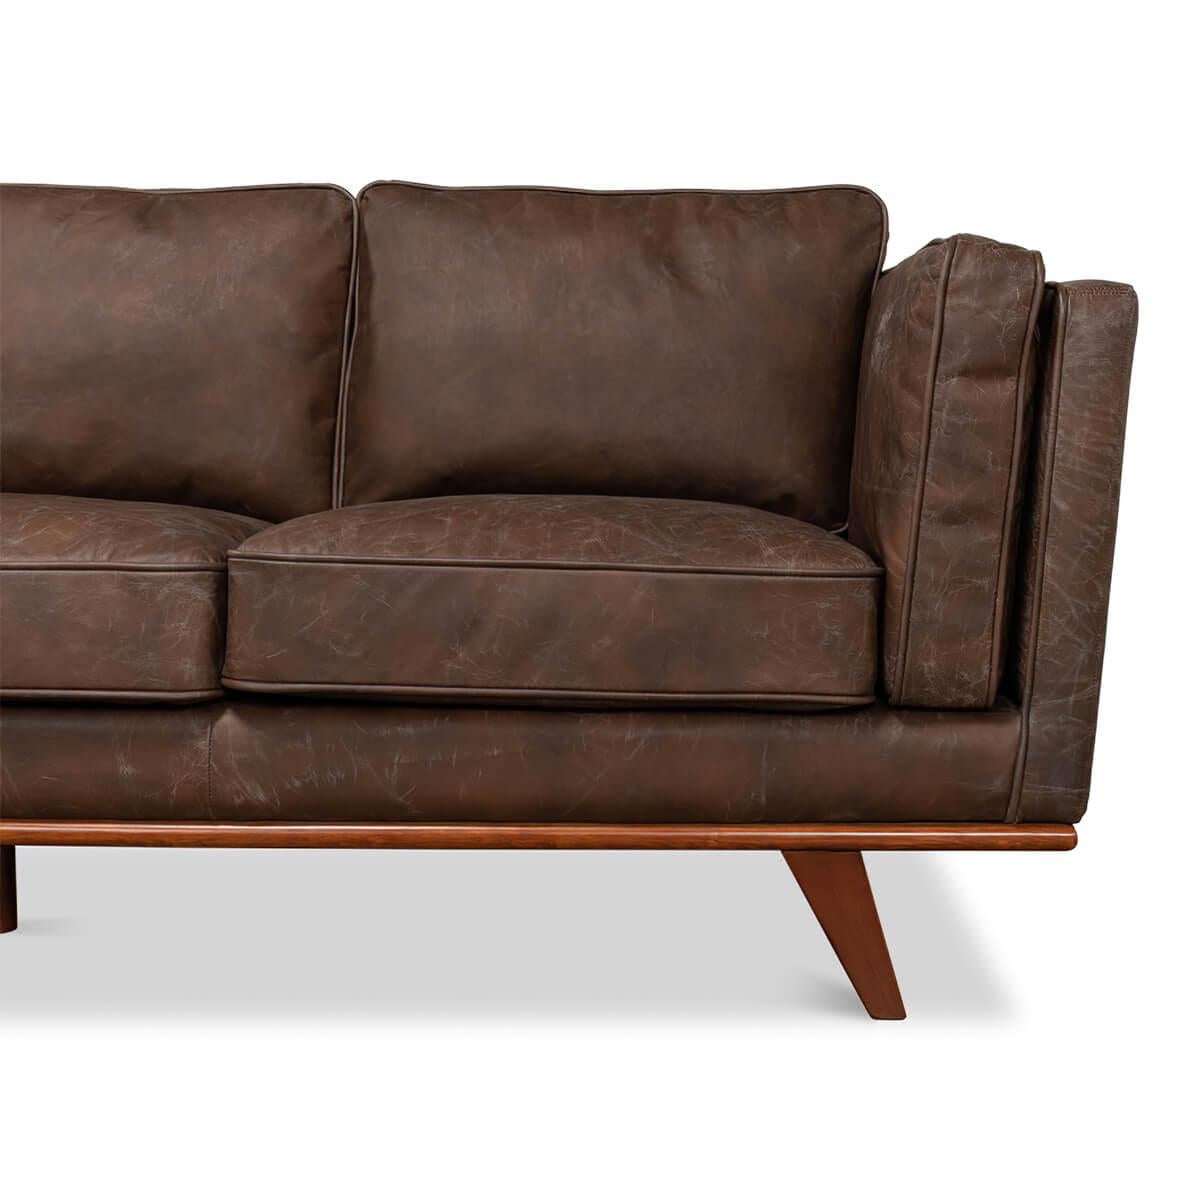 Asian European Mid Century Style Leather Sectional Sofa